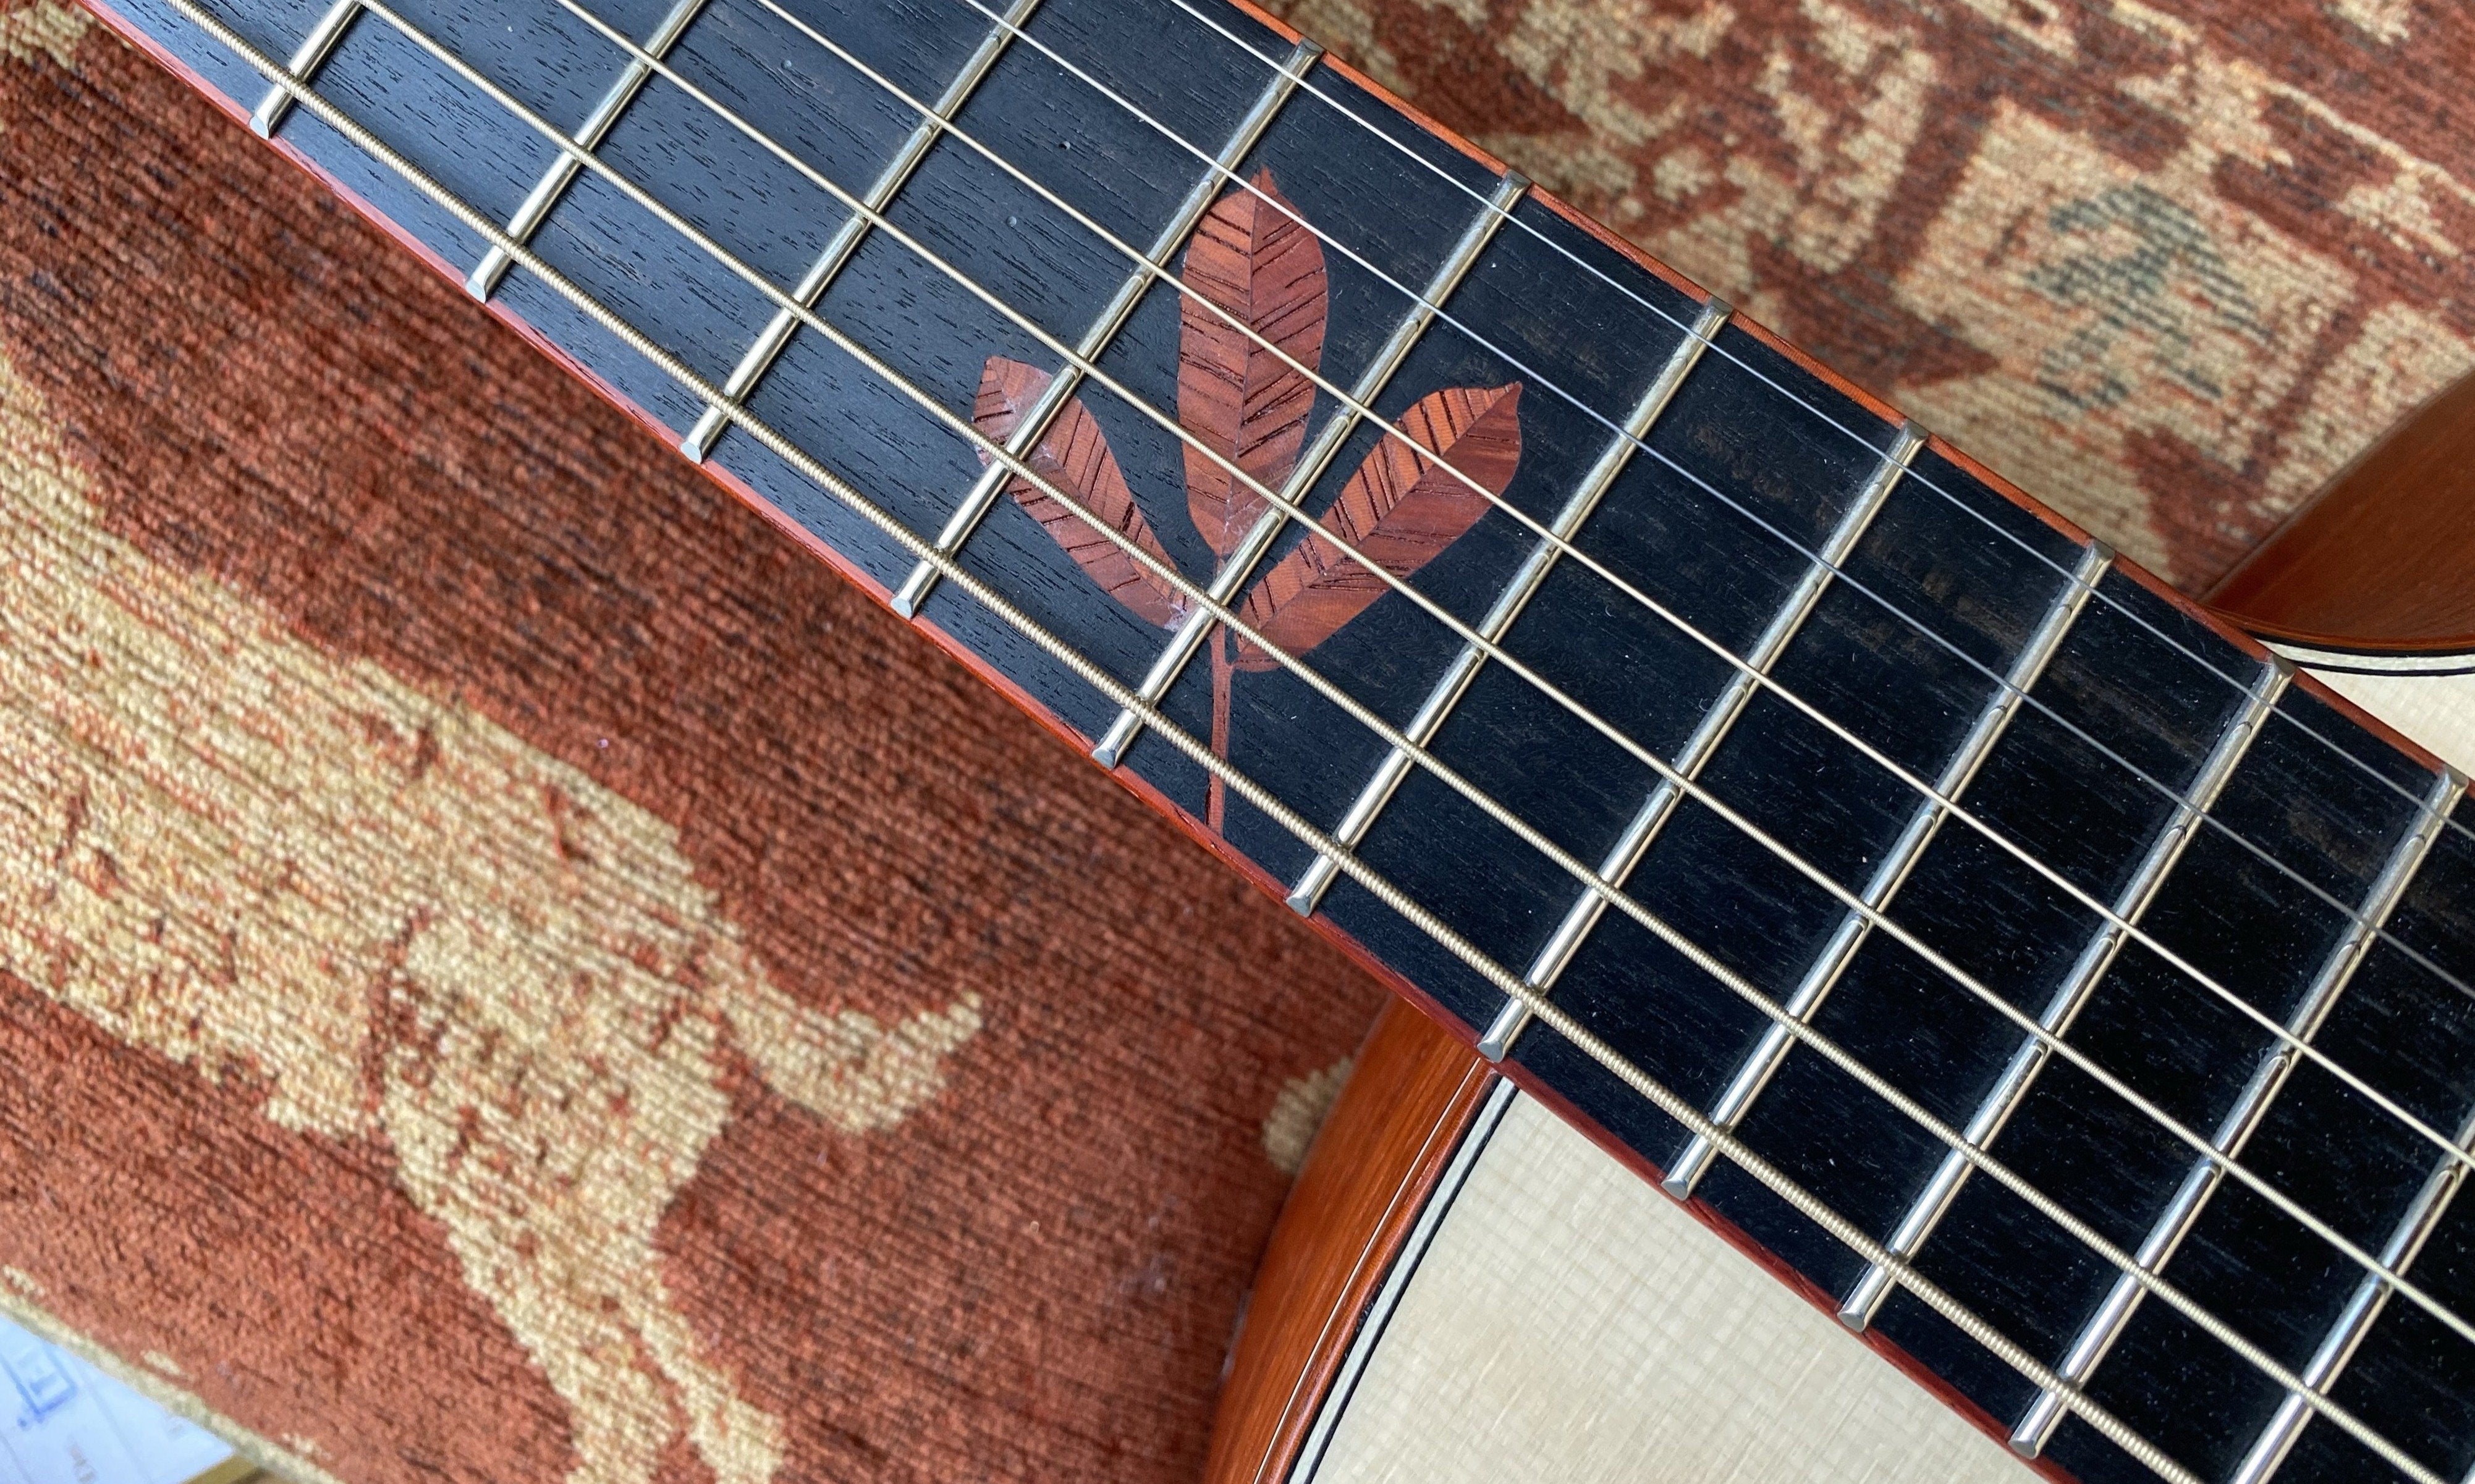 Dowina PADAUK GAC SWS (Swiss Spruce), Acoustic Guitar for sale at Richards Guitars.